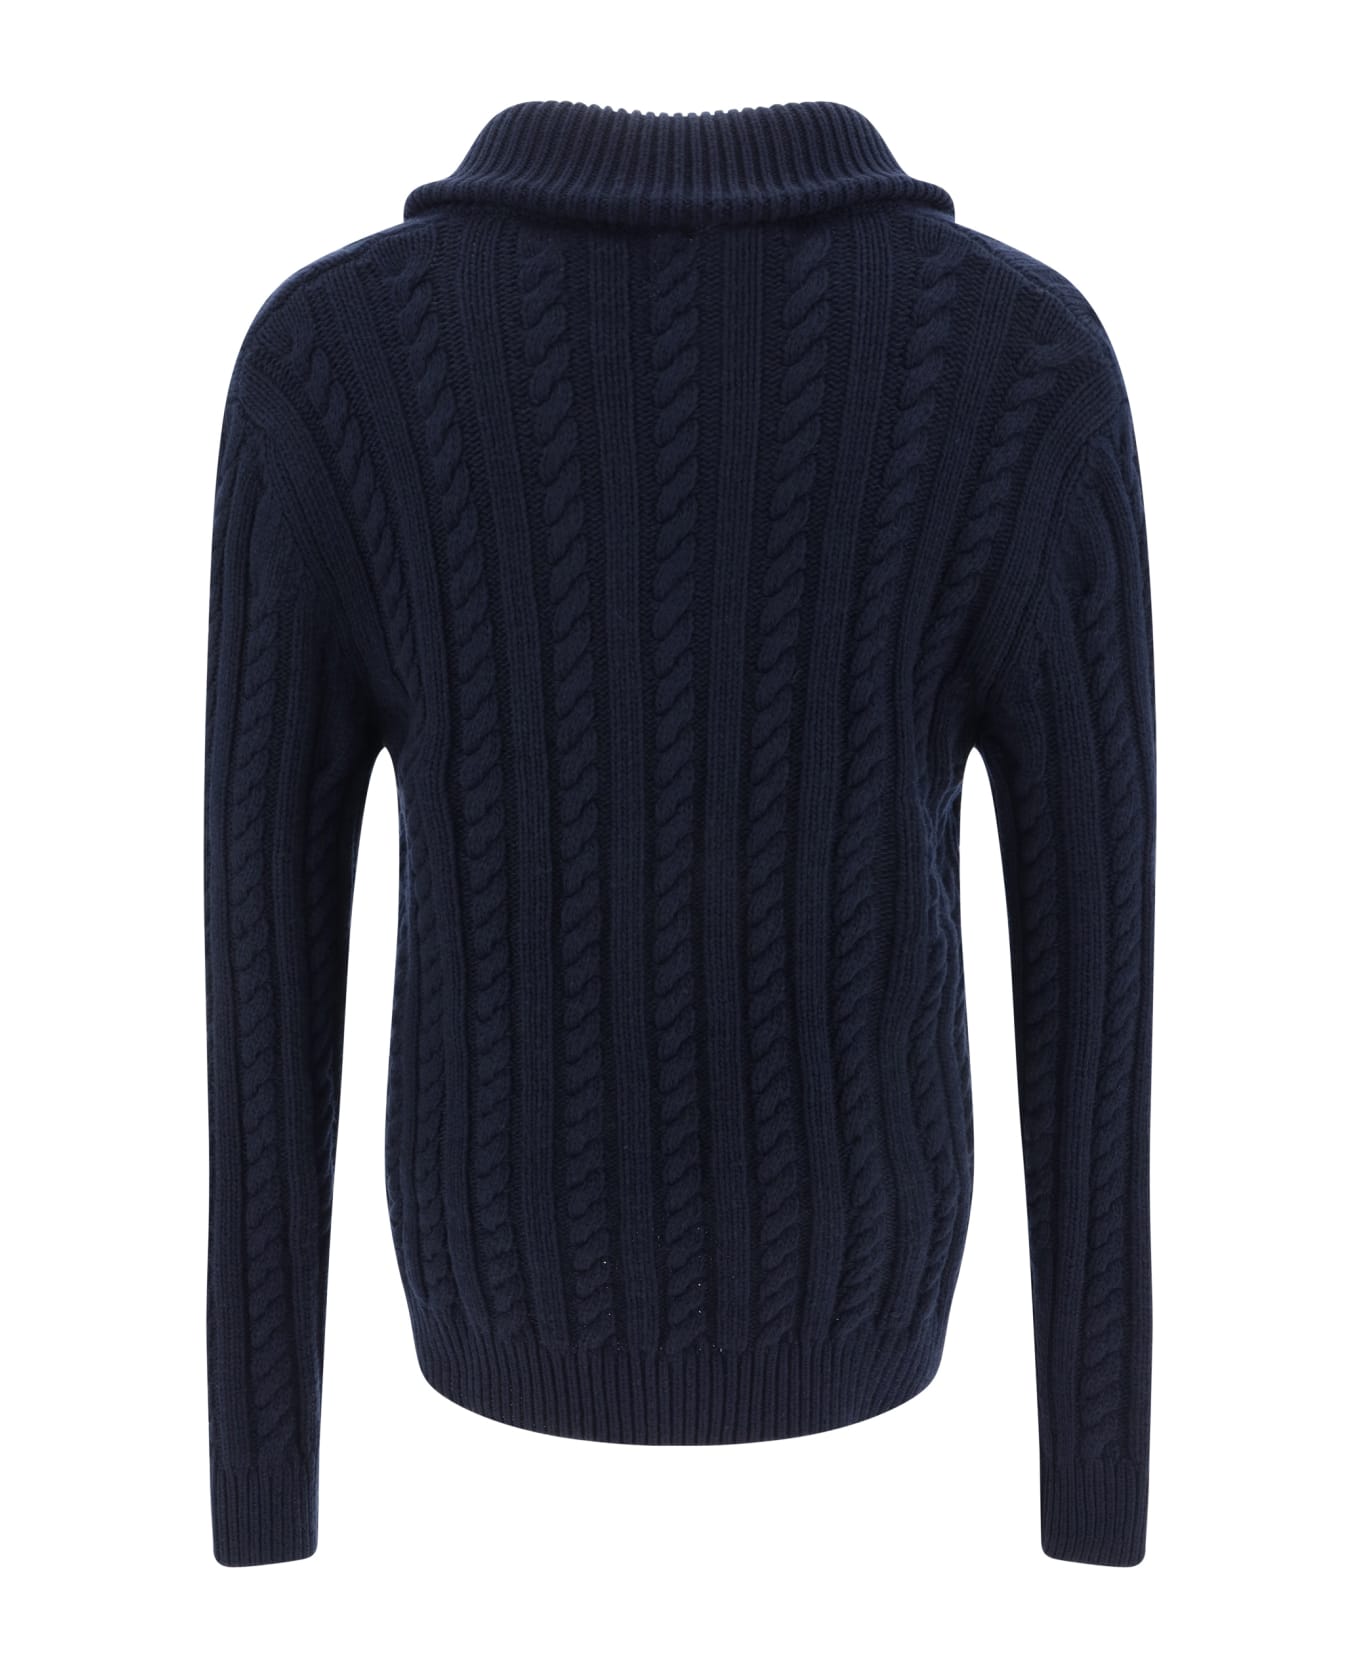 Valentino Cable Knit Sweater - Navy ニットウェア